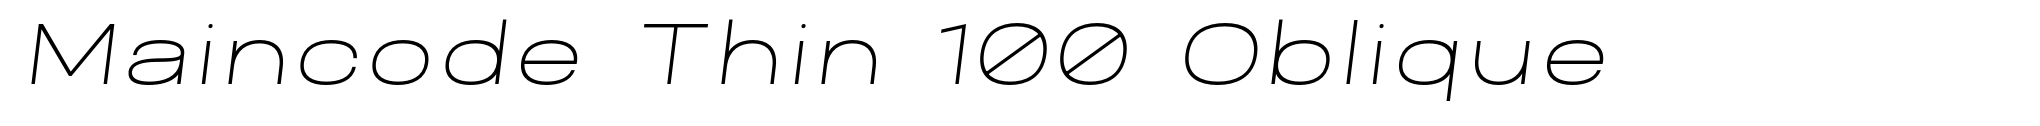 Maincode Thin 100 Oblique image